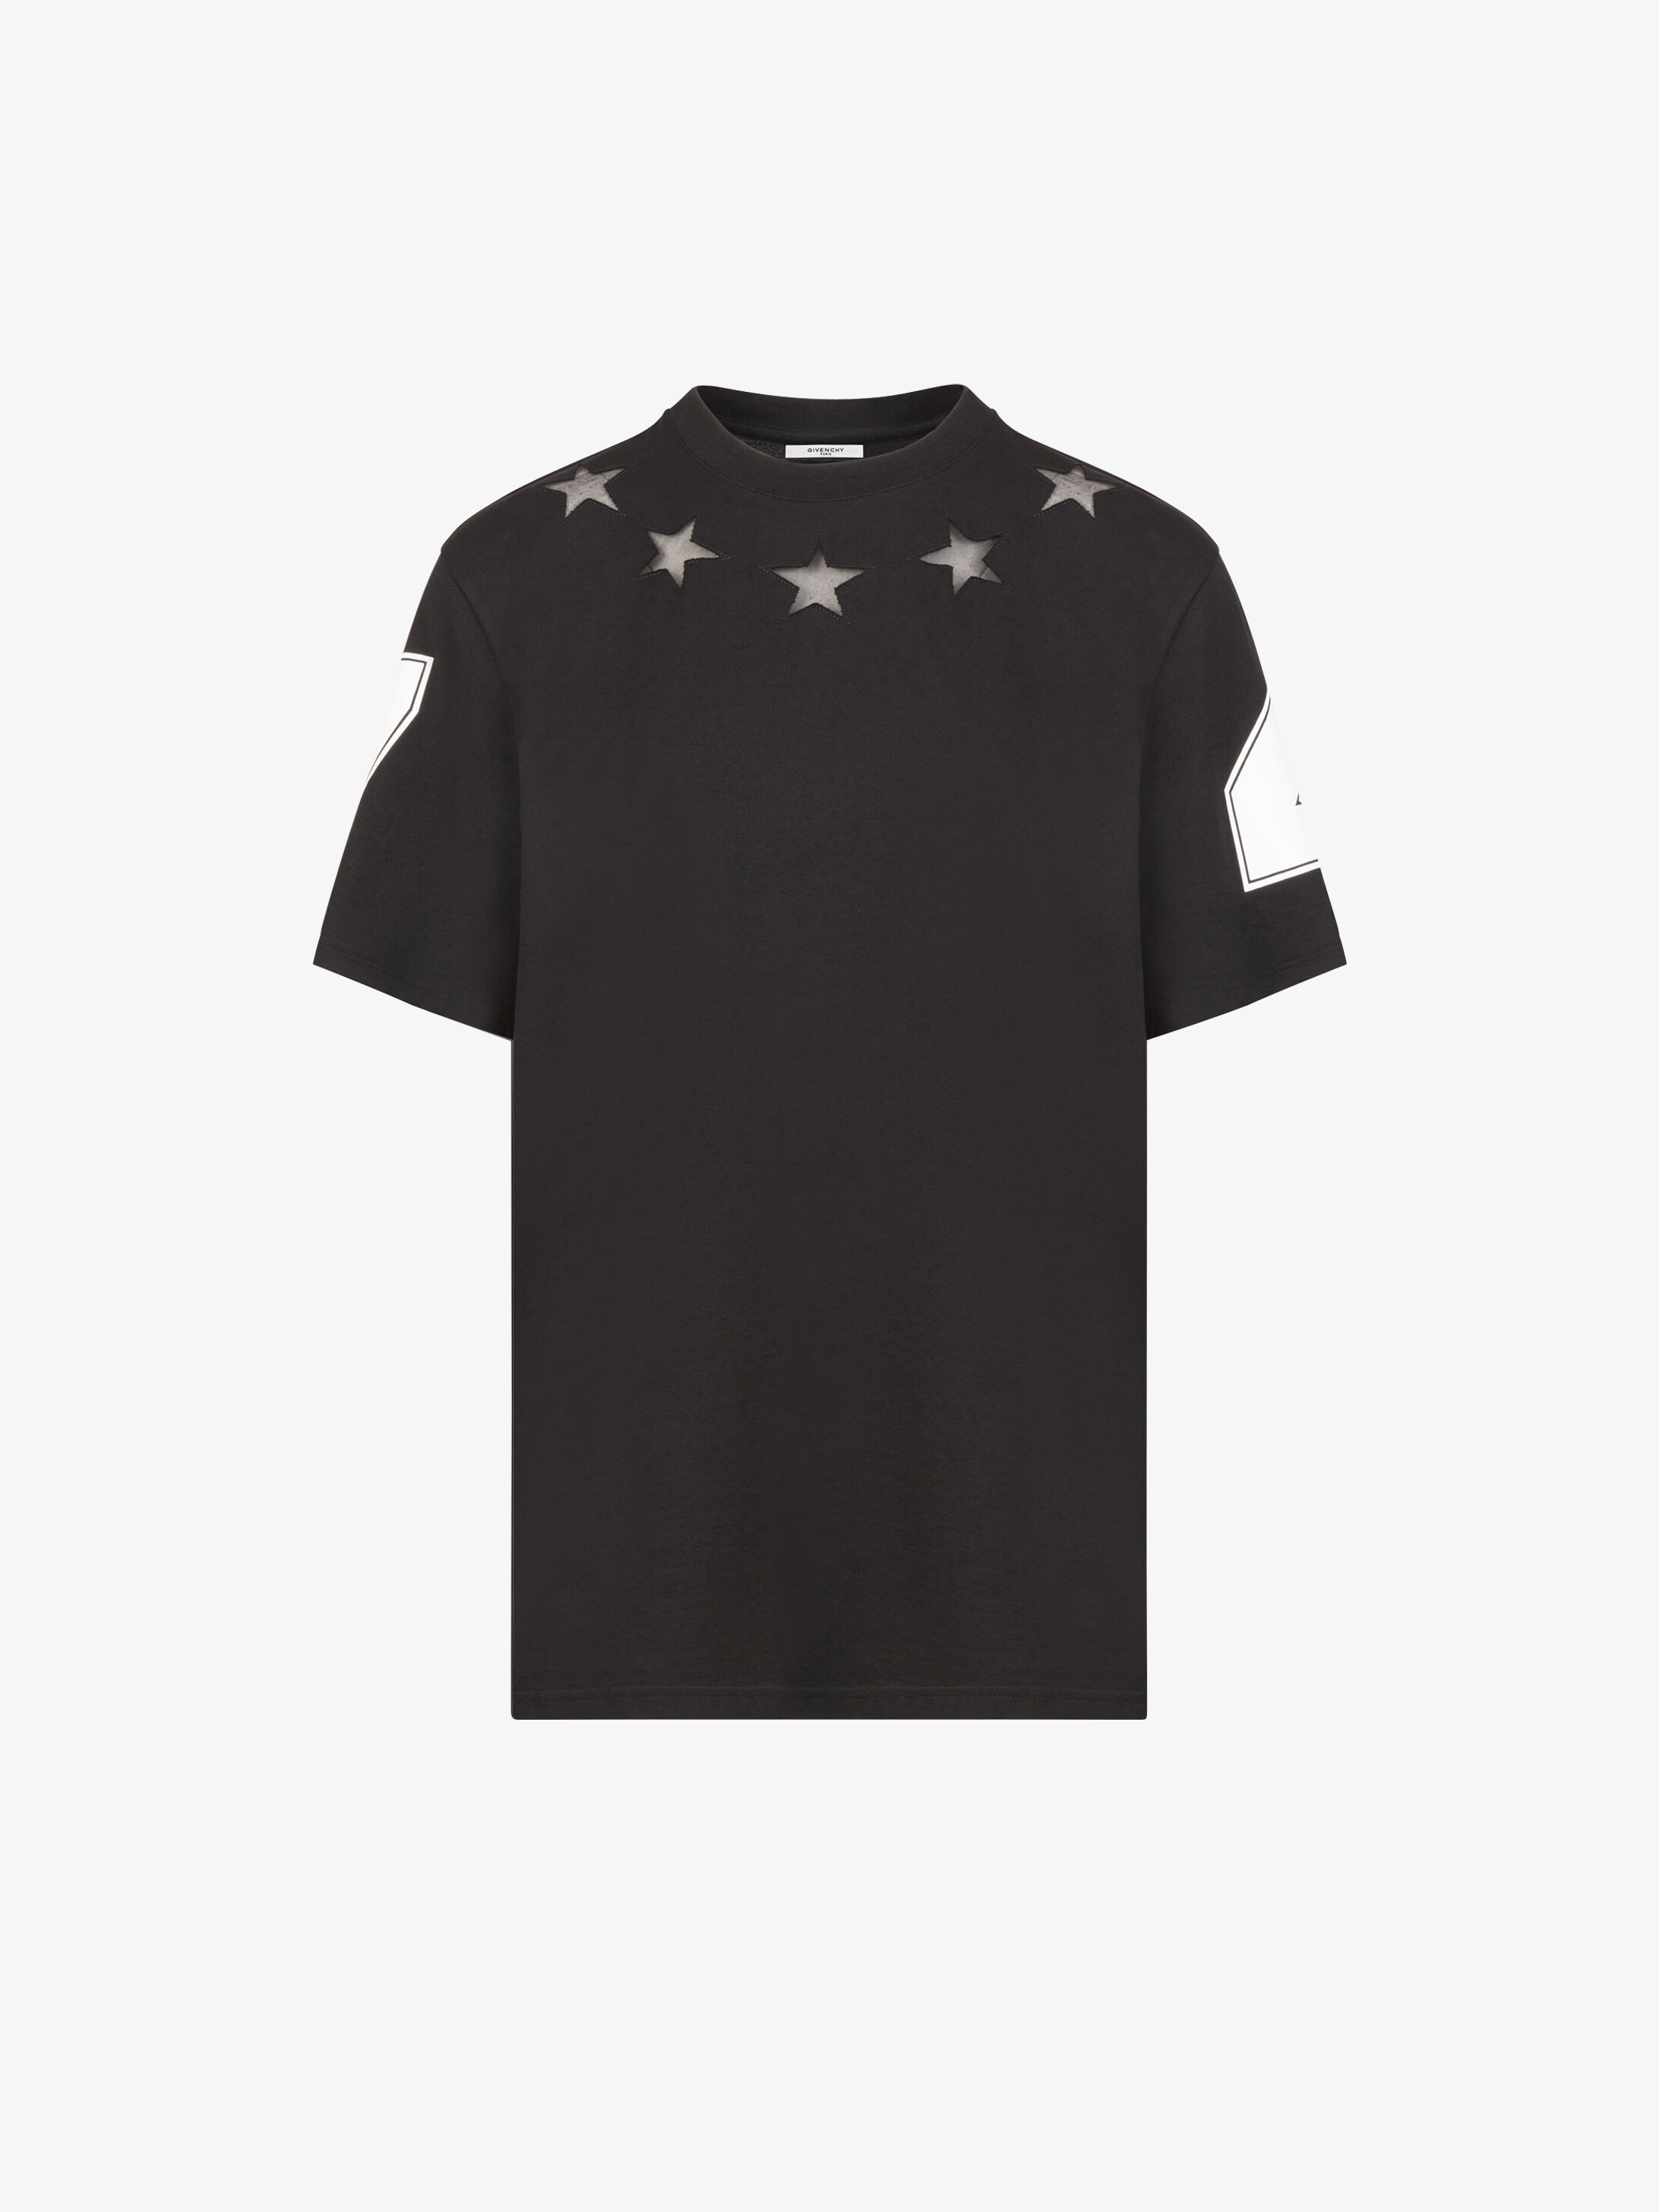 givenchy black star t shirt